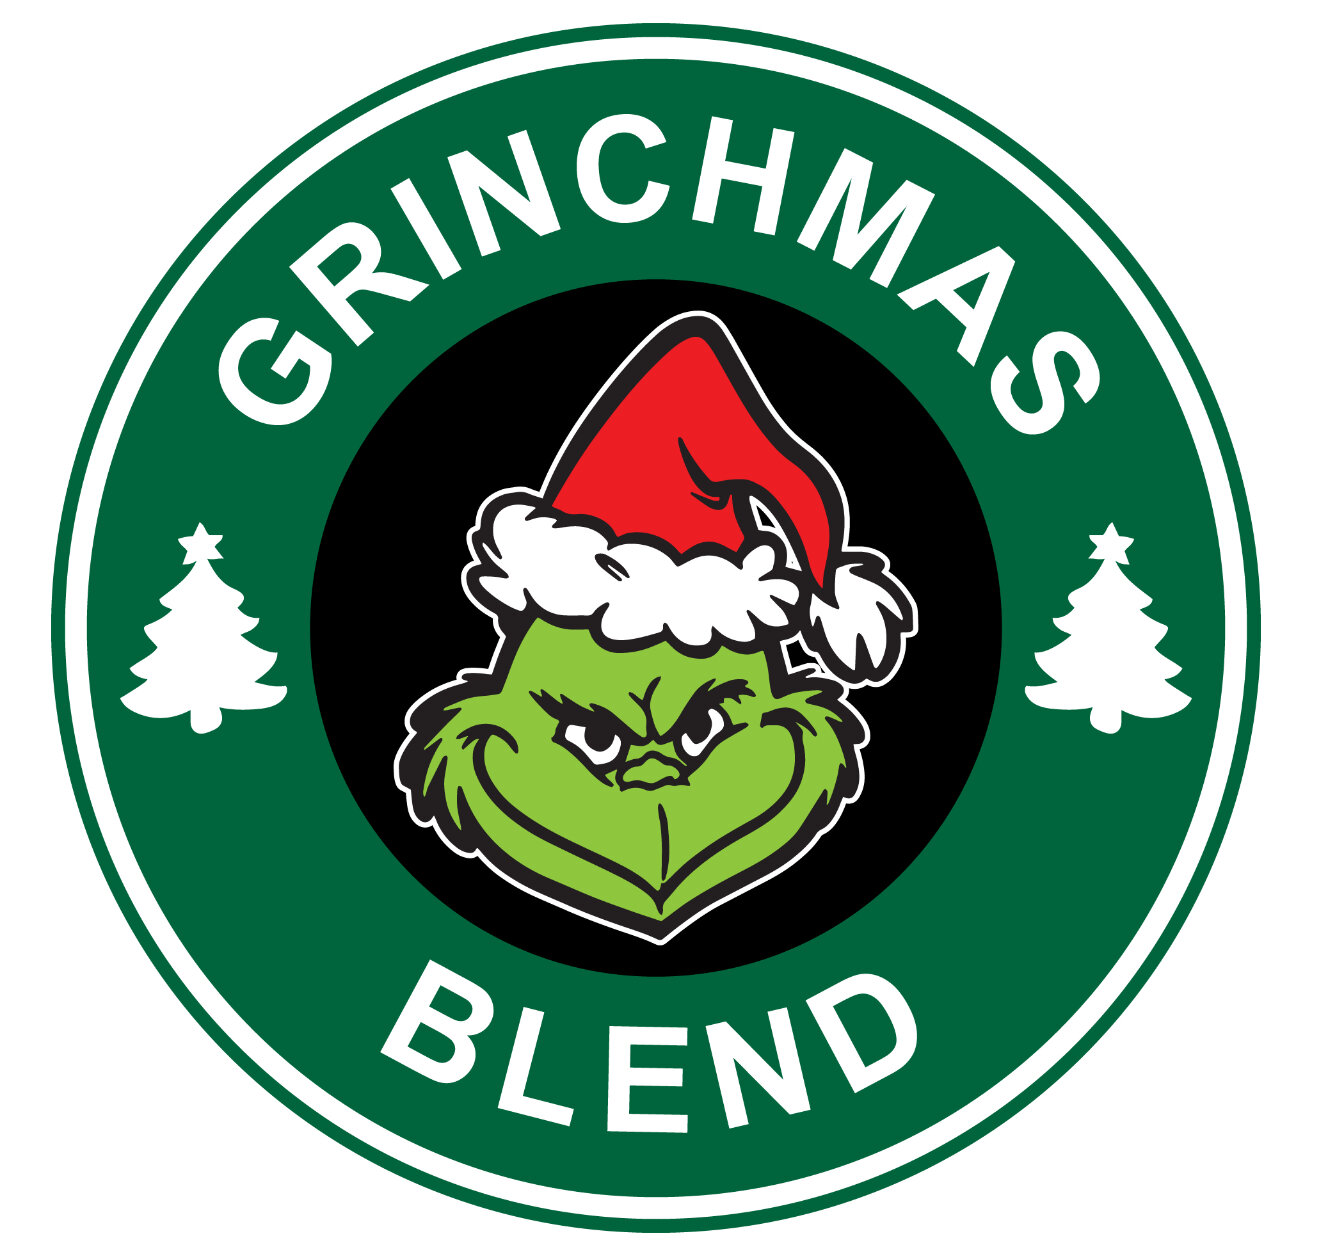 NEW #99 Grinchmas Blend